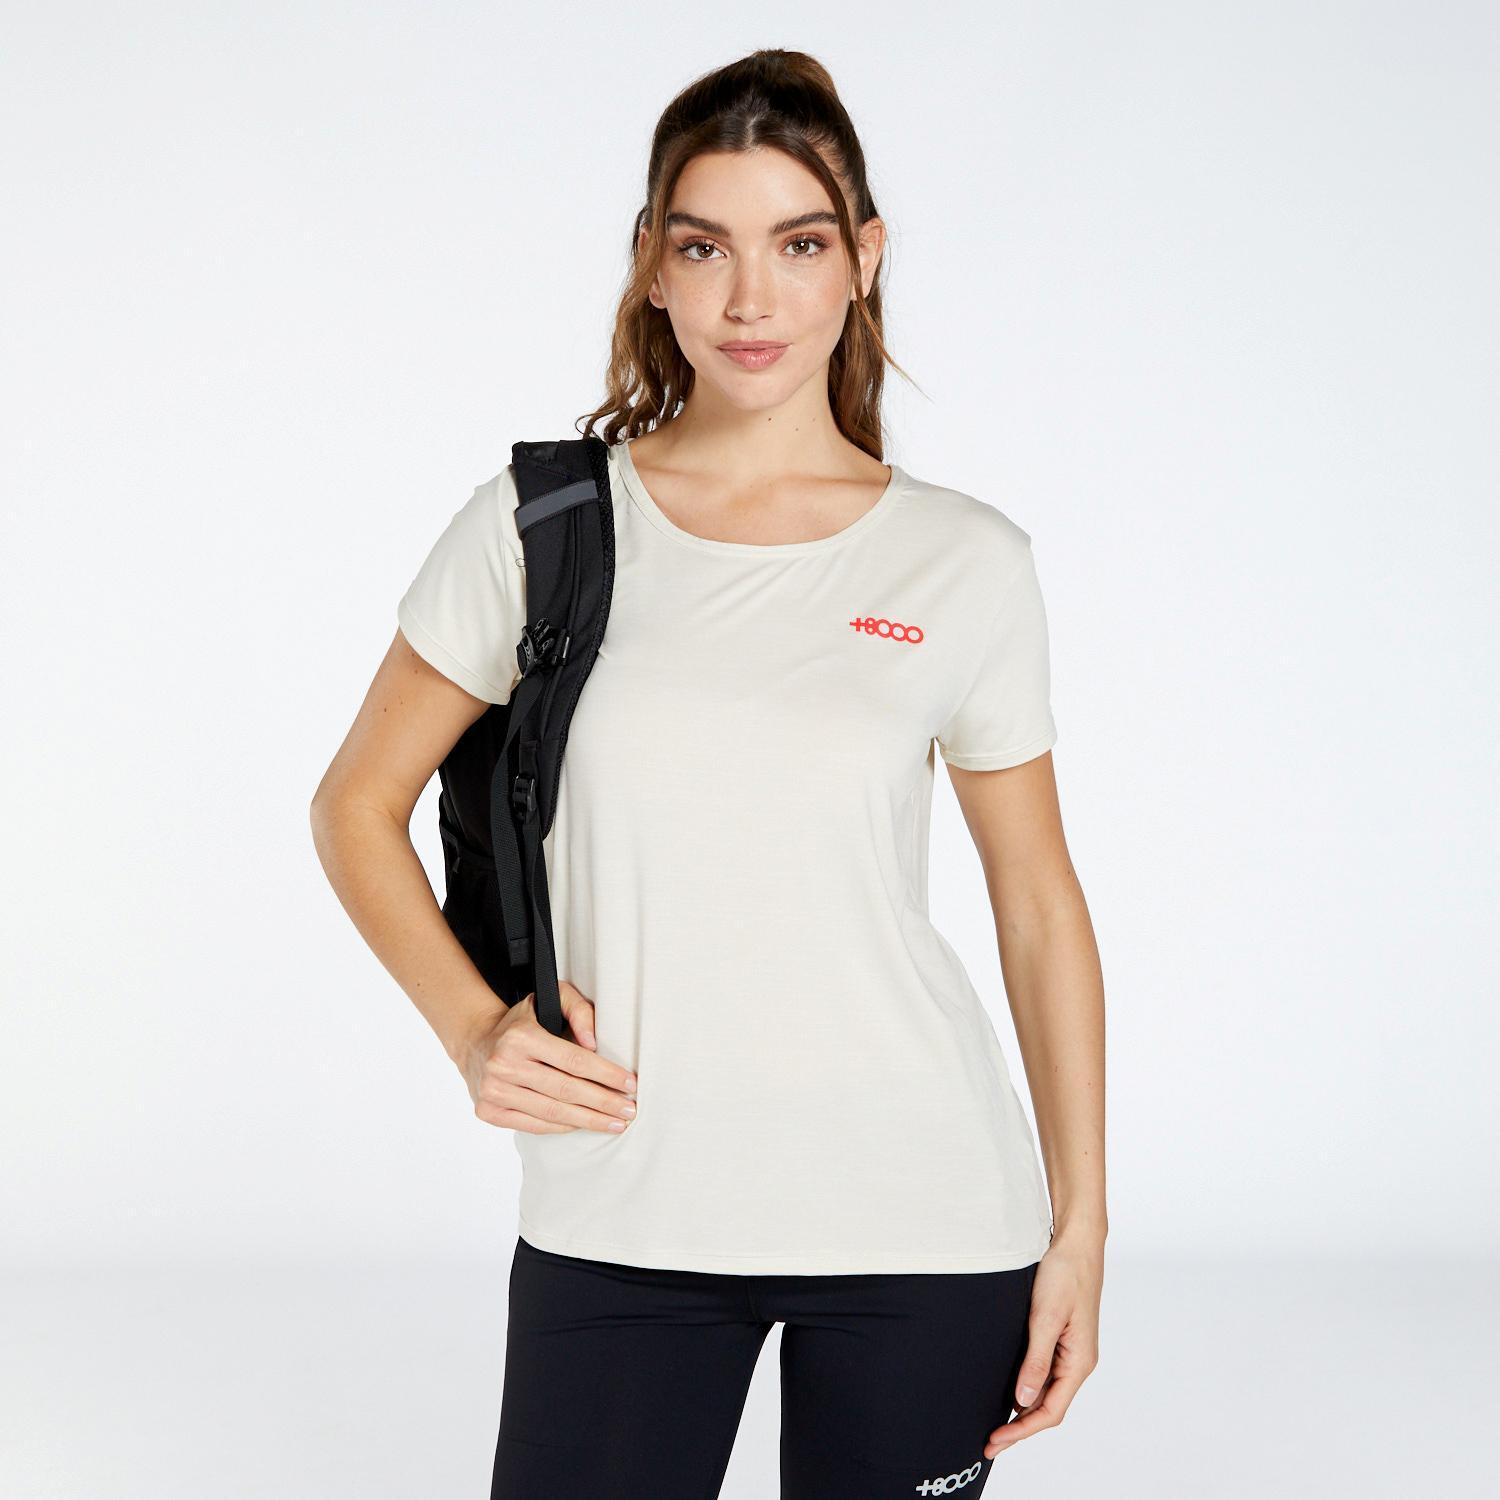 +8000 Nabla - Beige - Camiseta Trekking Mujer talla XL